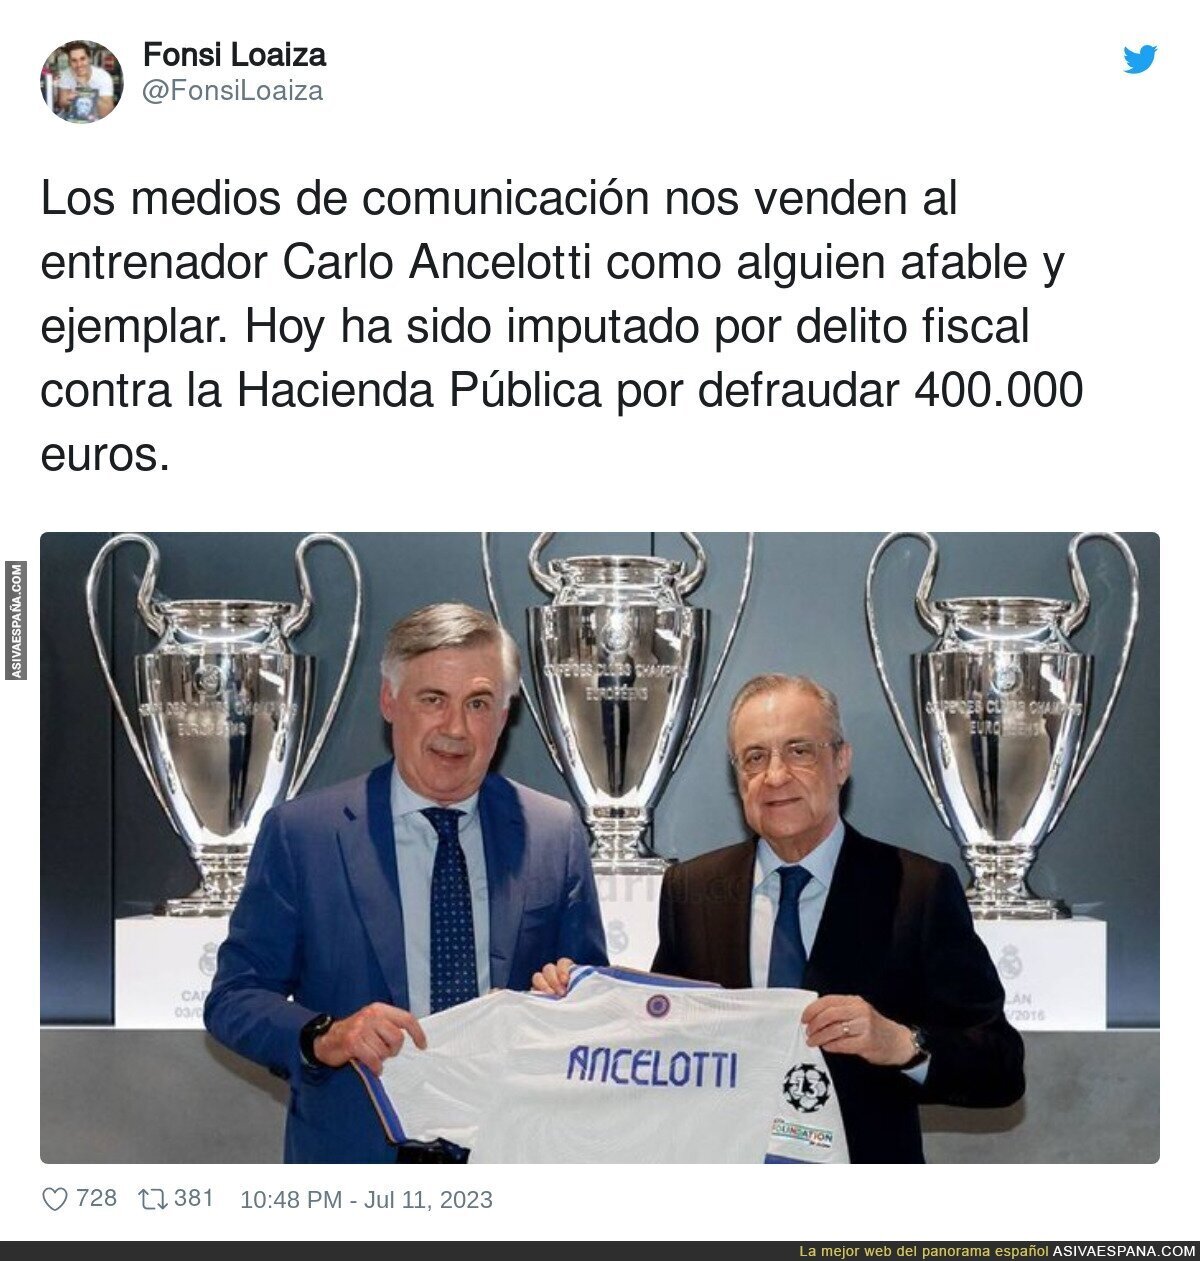 Ancelotti podria haber defraudado a Hacienda